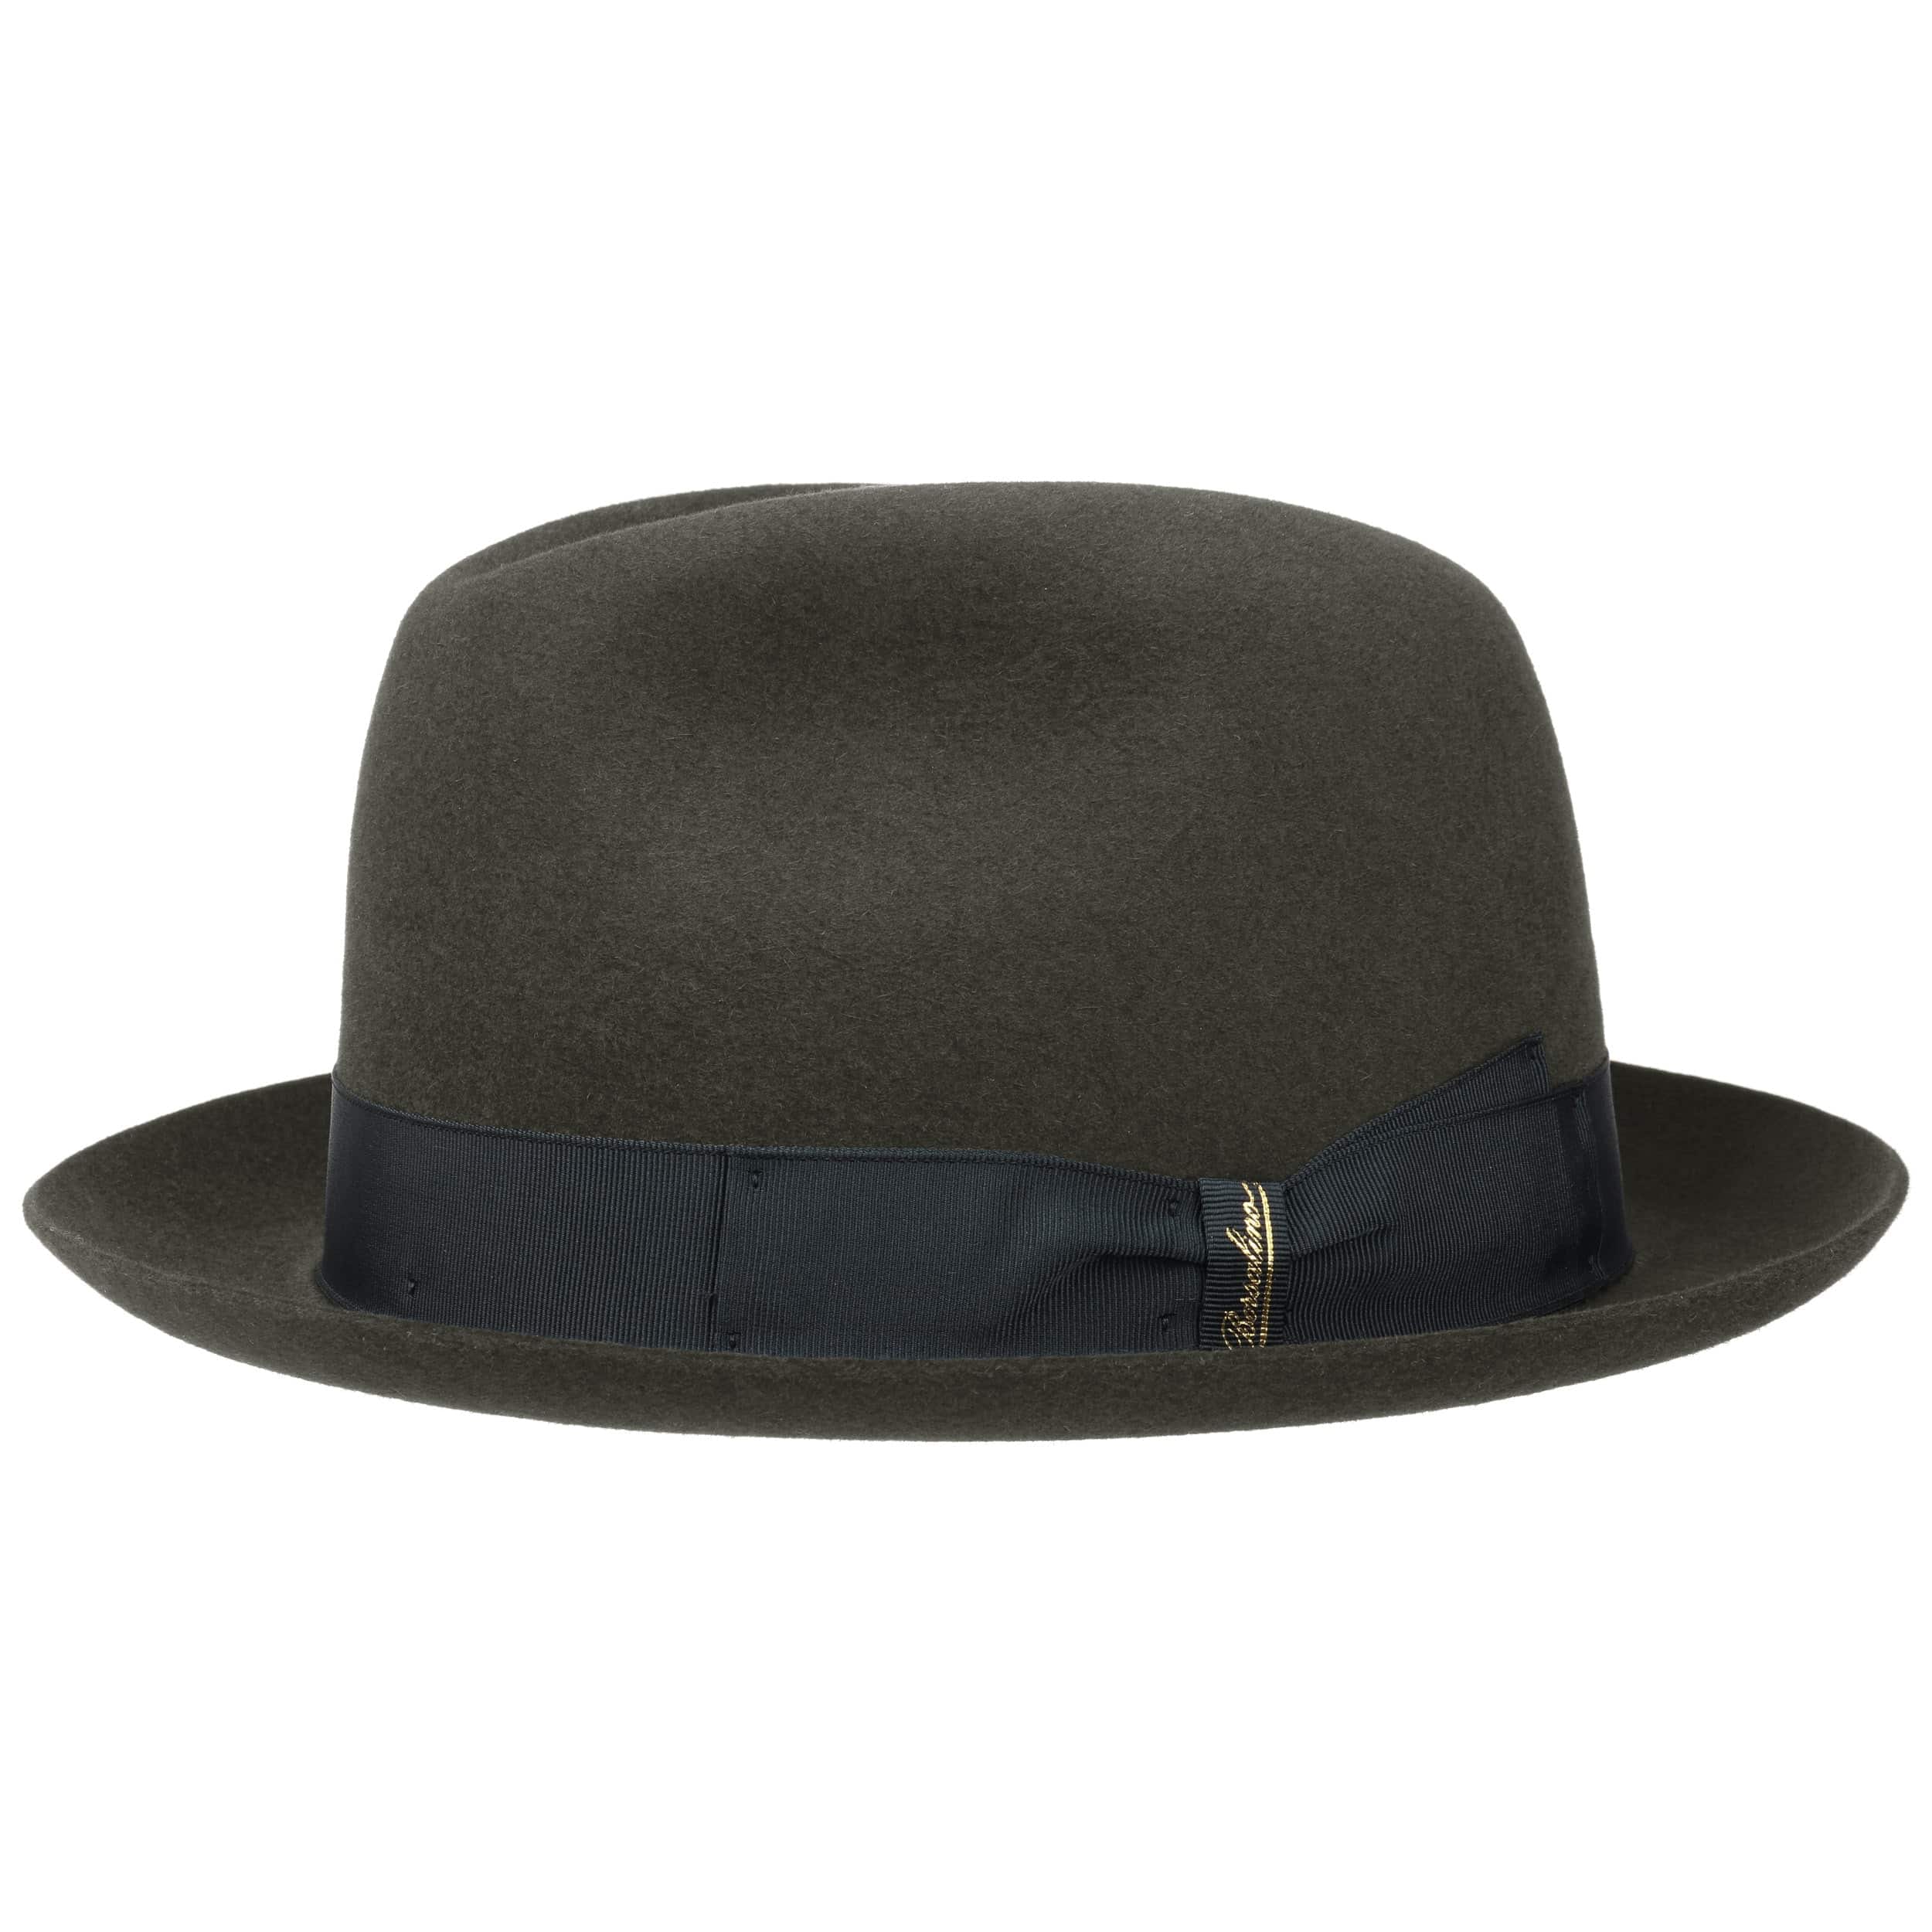 Marengo Fur Felt Fedora Hat by Borsalino - 232,95